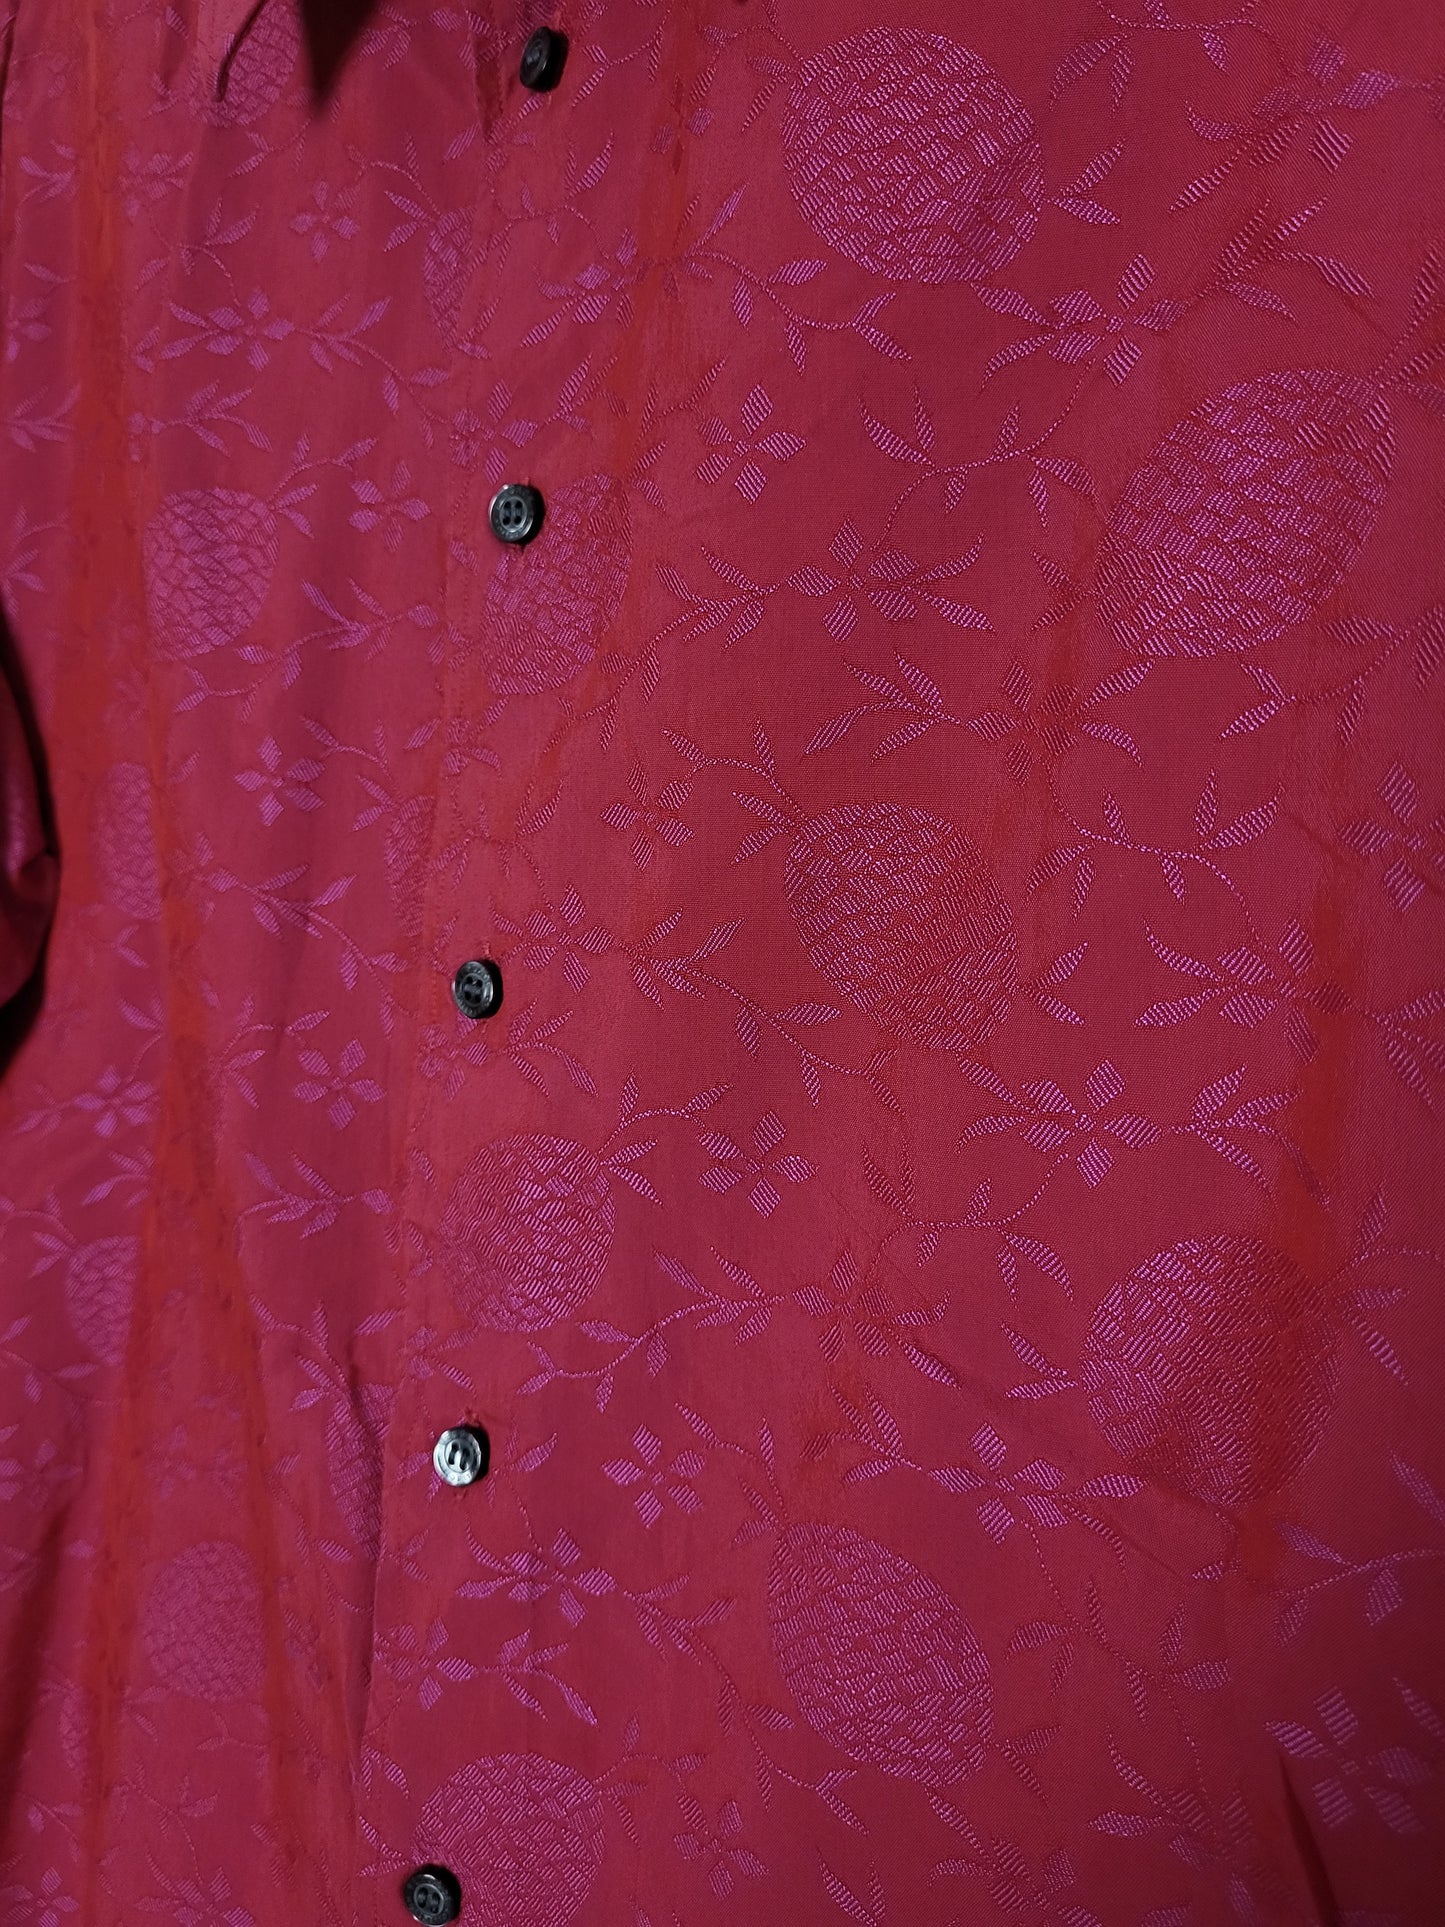 VERSACE Collection - Hemd - Exklusiv - Rot mit Muster - Herren - M